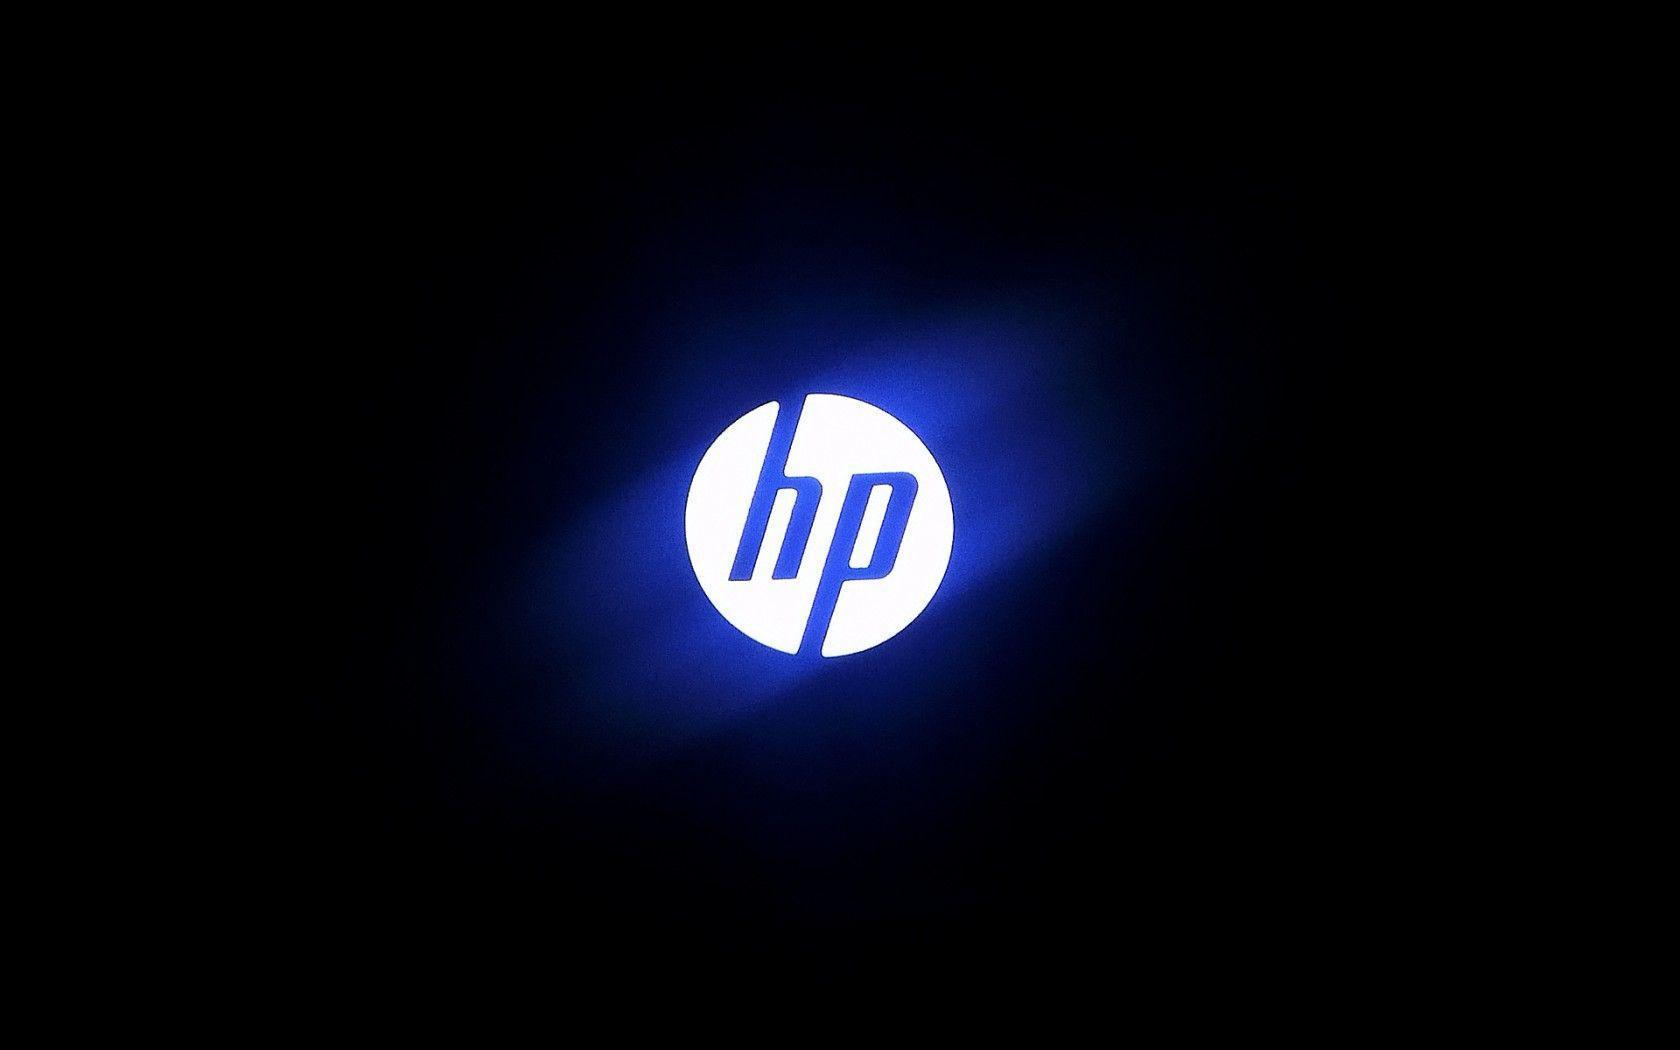 HP Glowing logo wallpapers hd